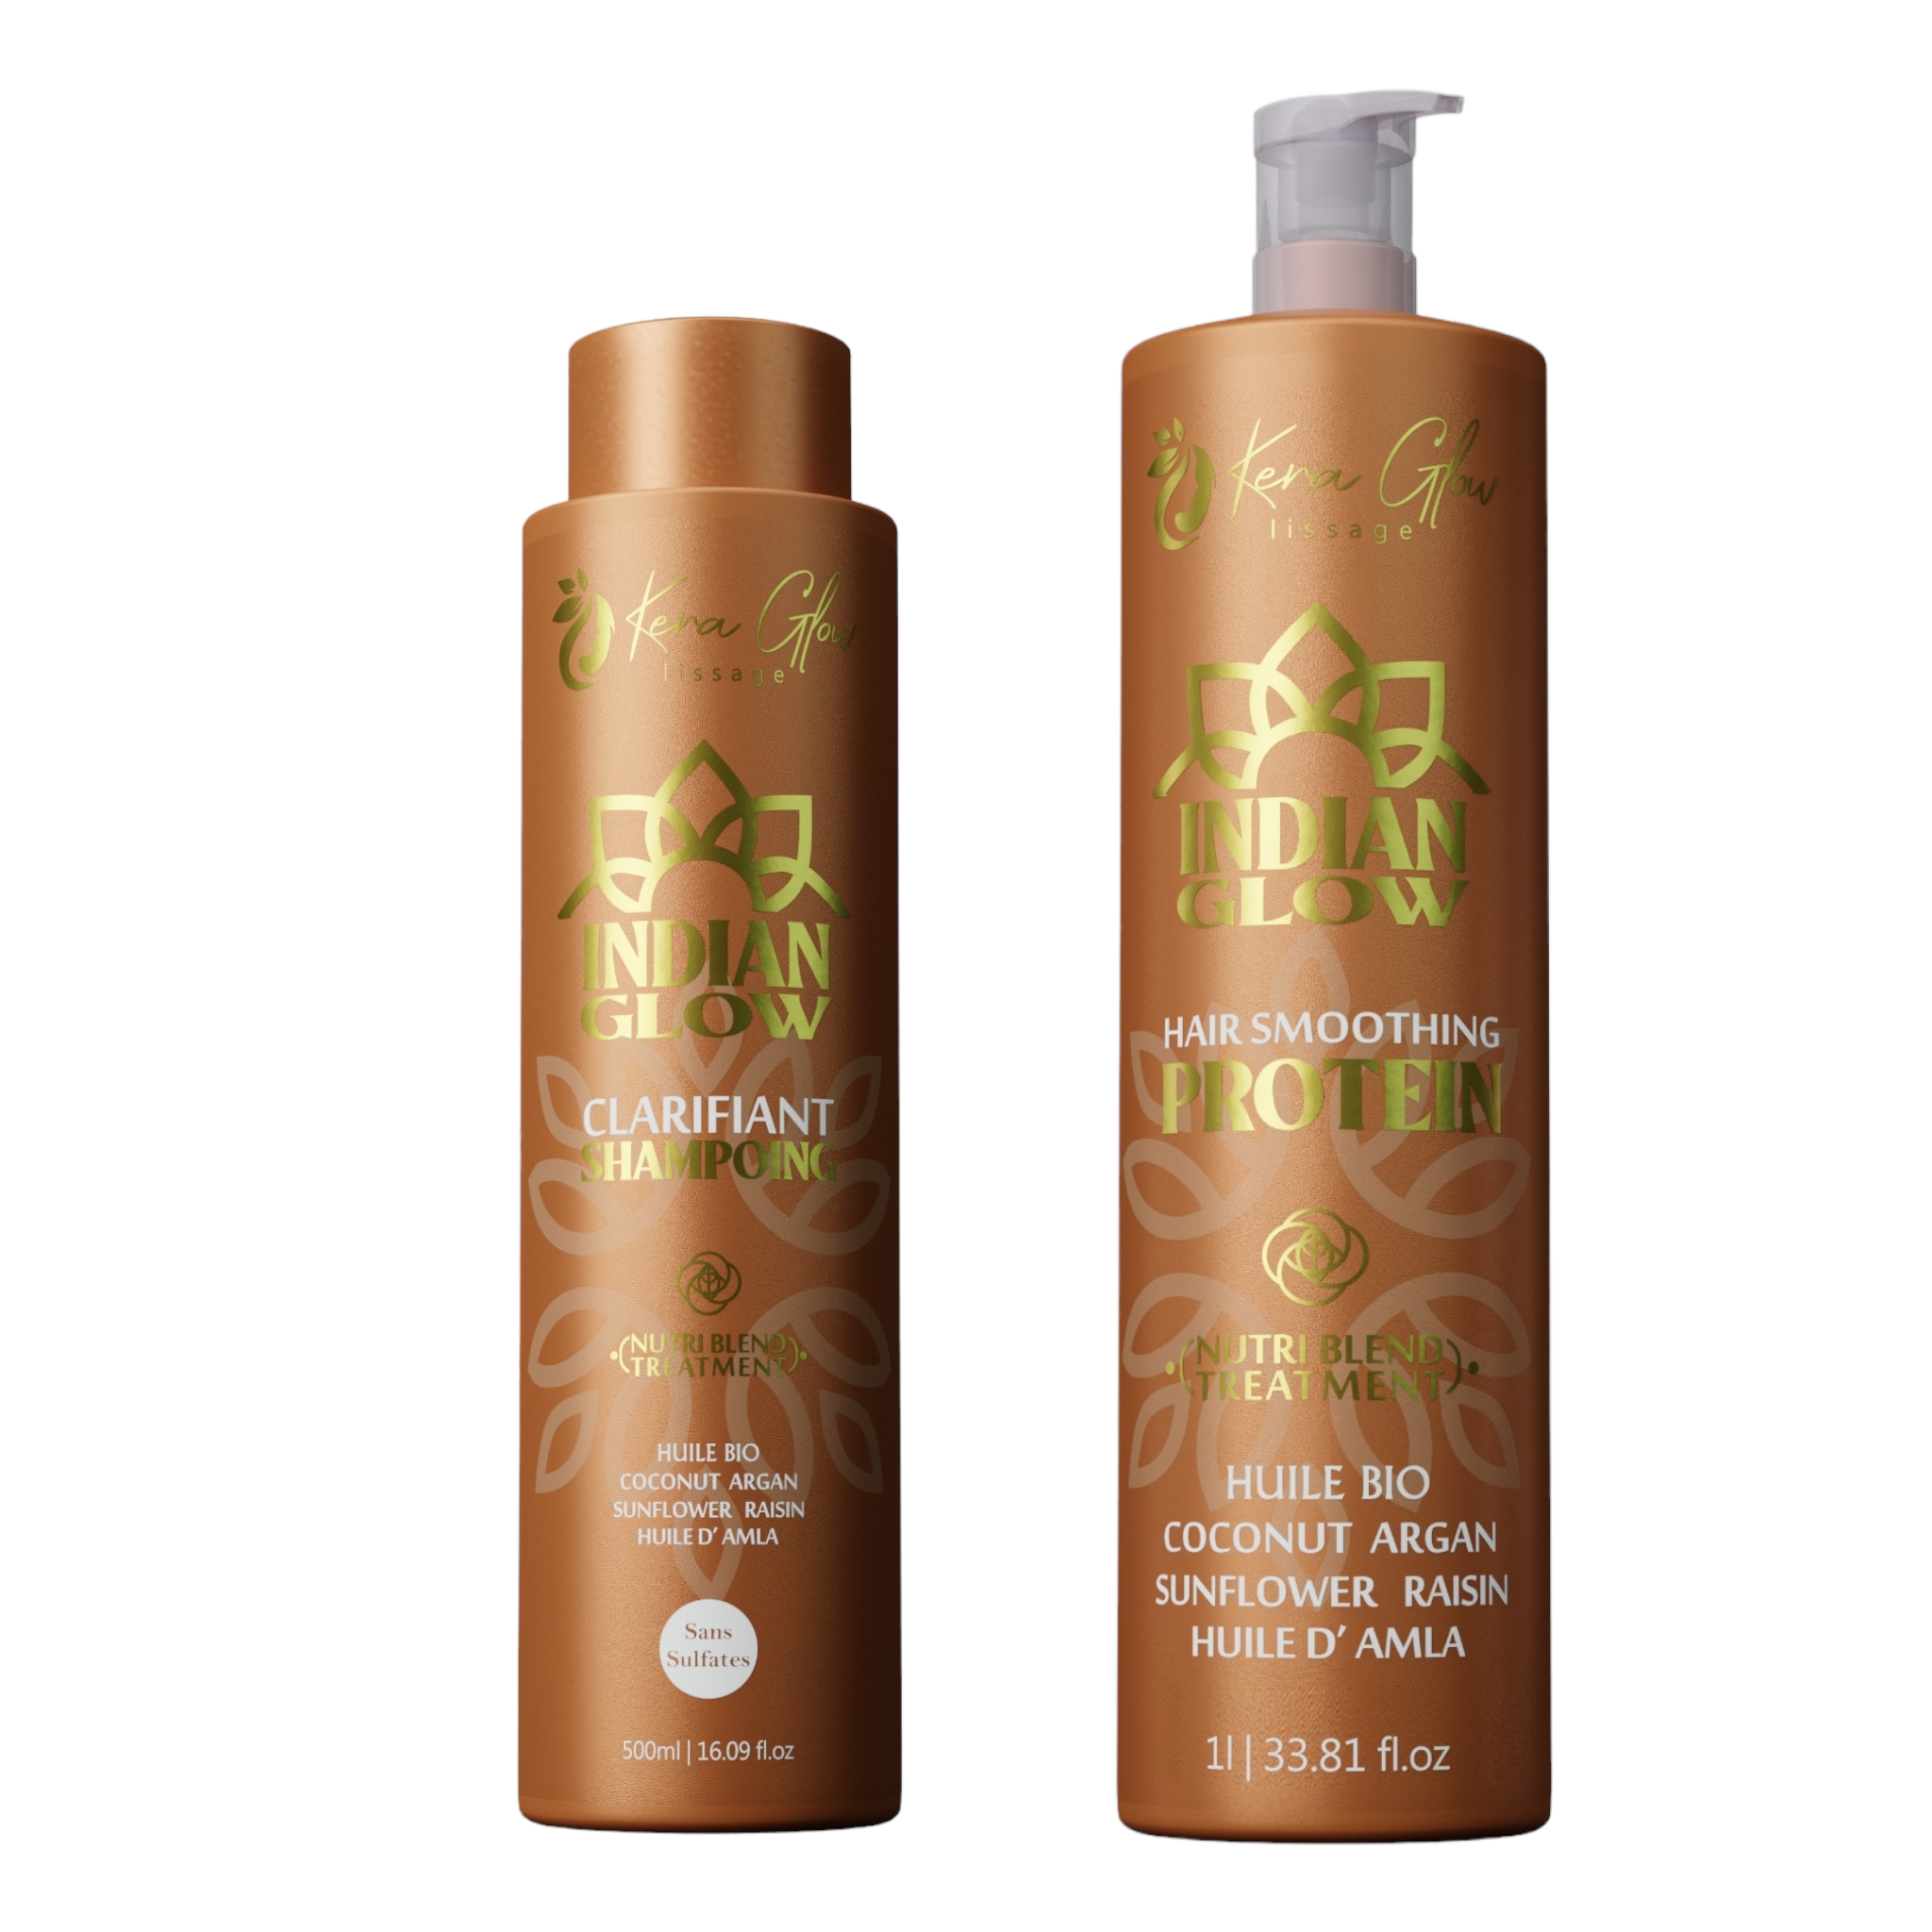 Lissage indien Kera Glow kit complet step1&step2 lissage + shampong keratine sans sulfate 500ml offert